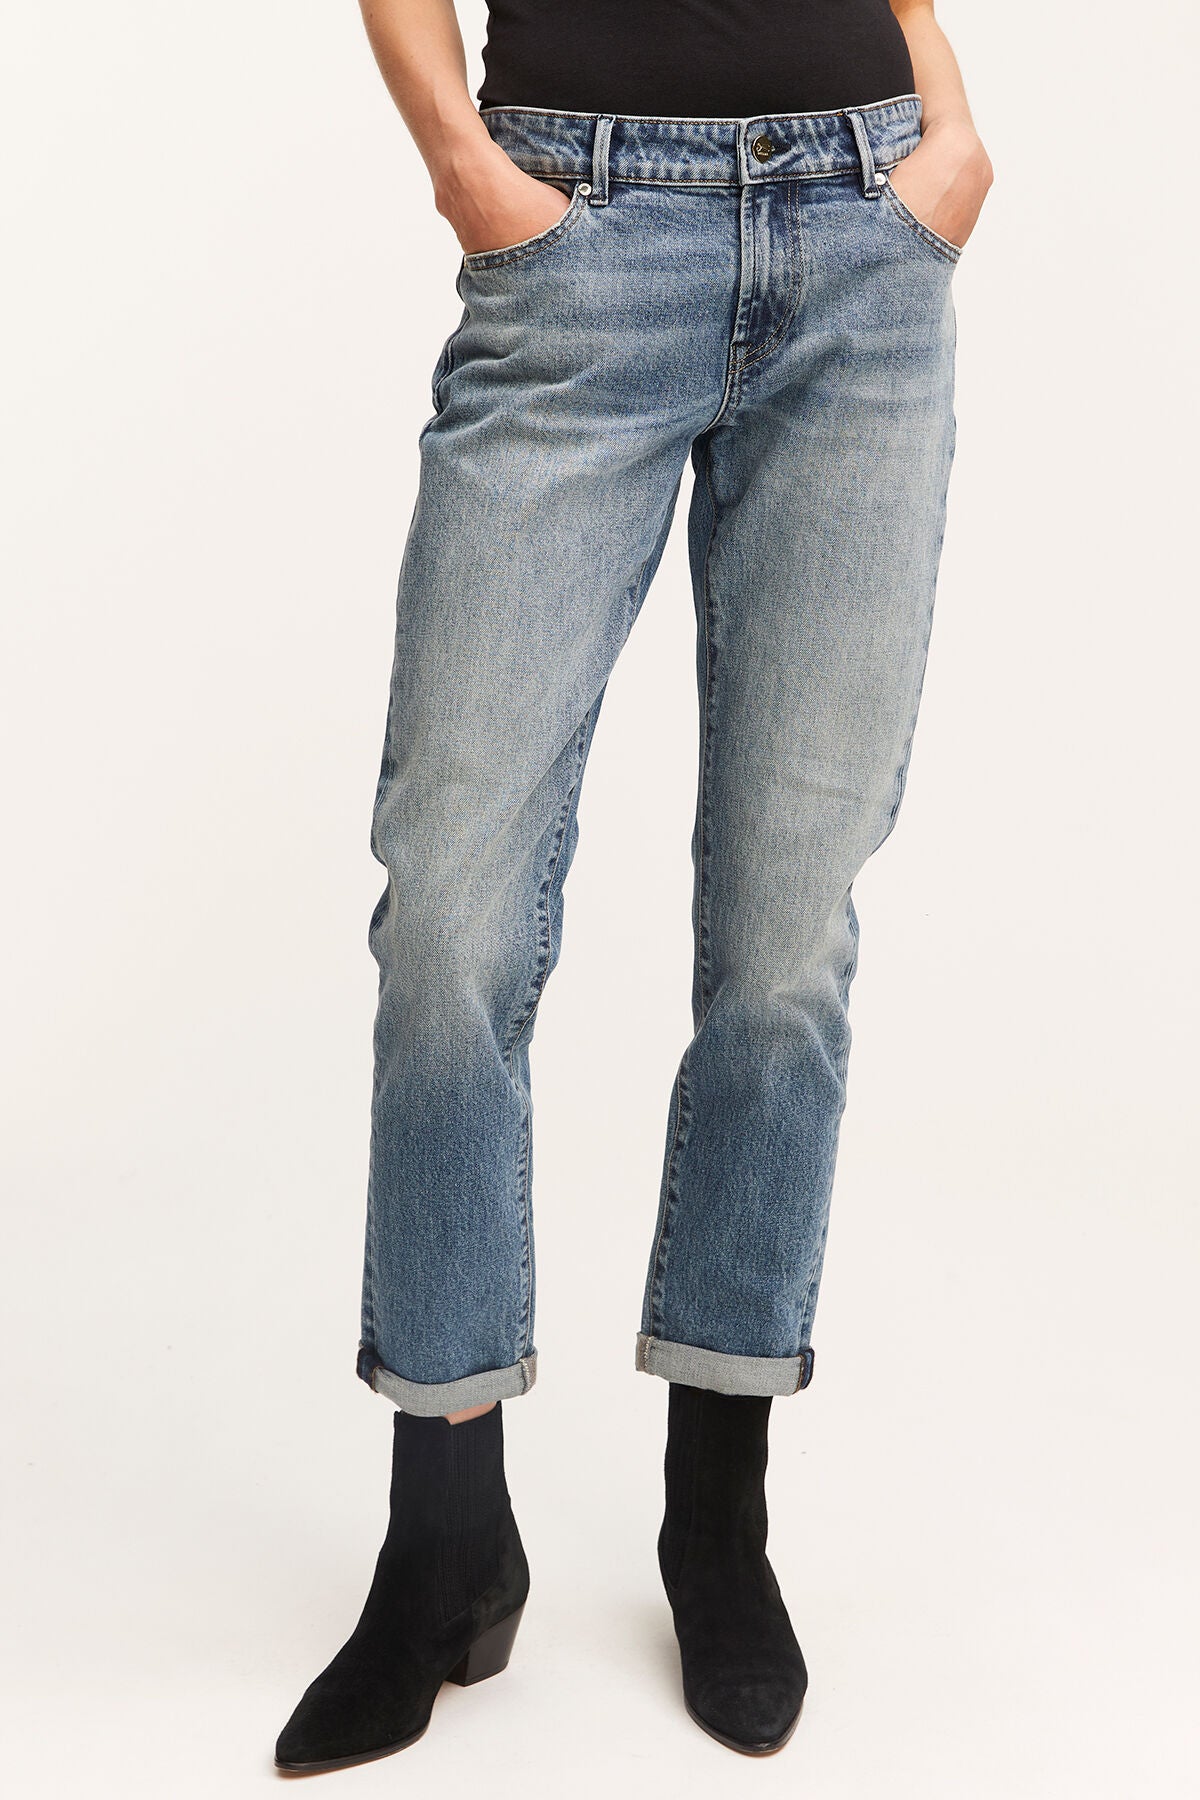 A woman wearing Denham's MONROE Girlfriend - Vintage Indigo Wash jeans with a black top.